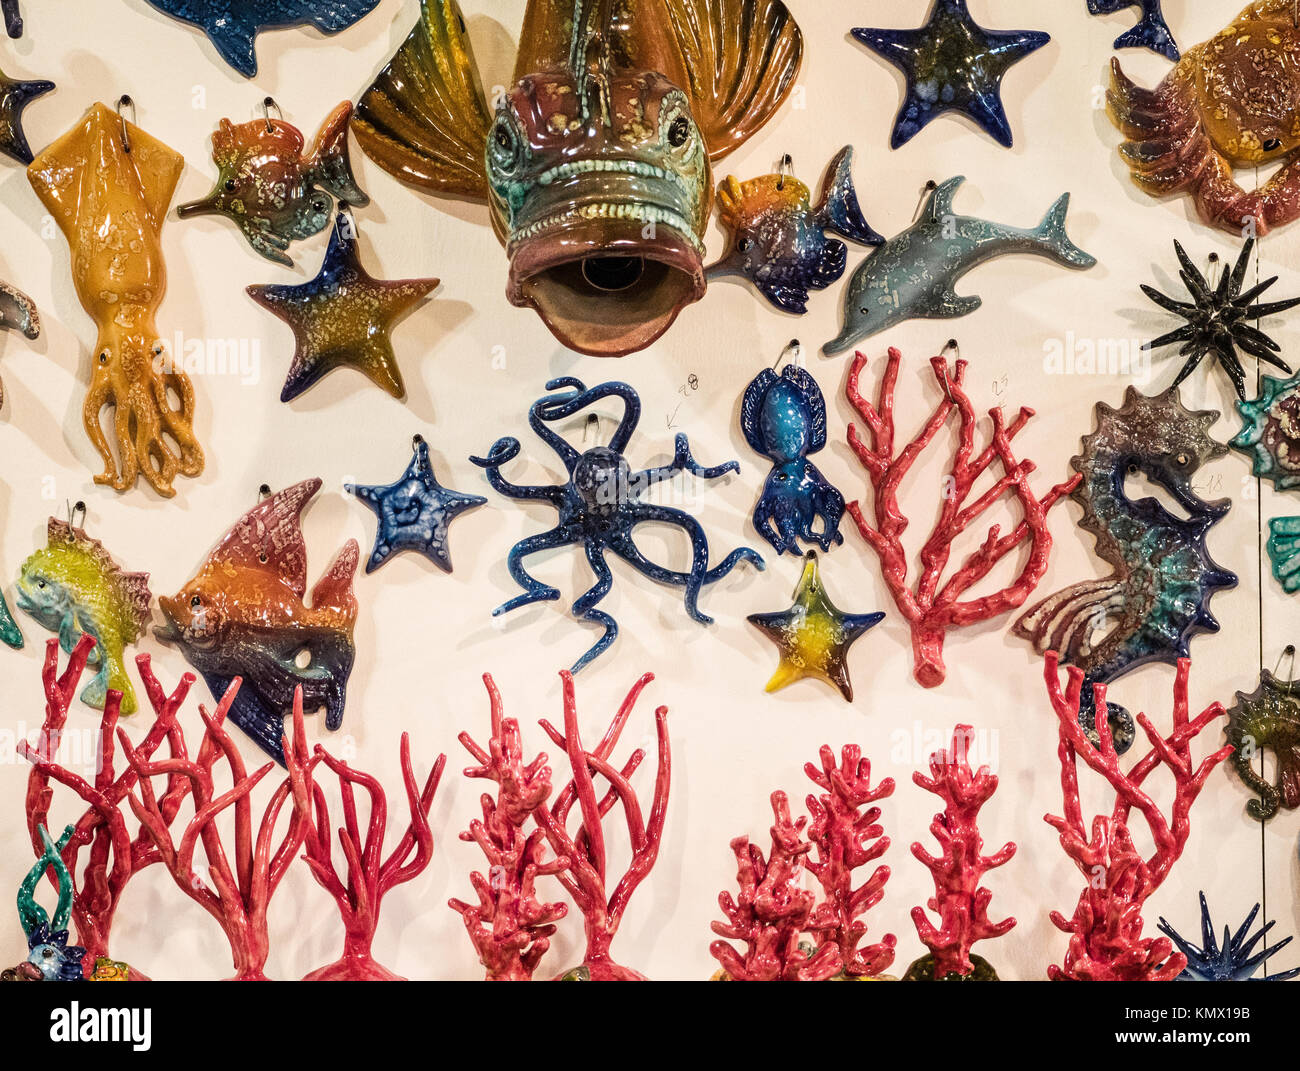 Keramik Reproduktion von Meerestieren Stockfoto